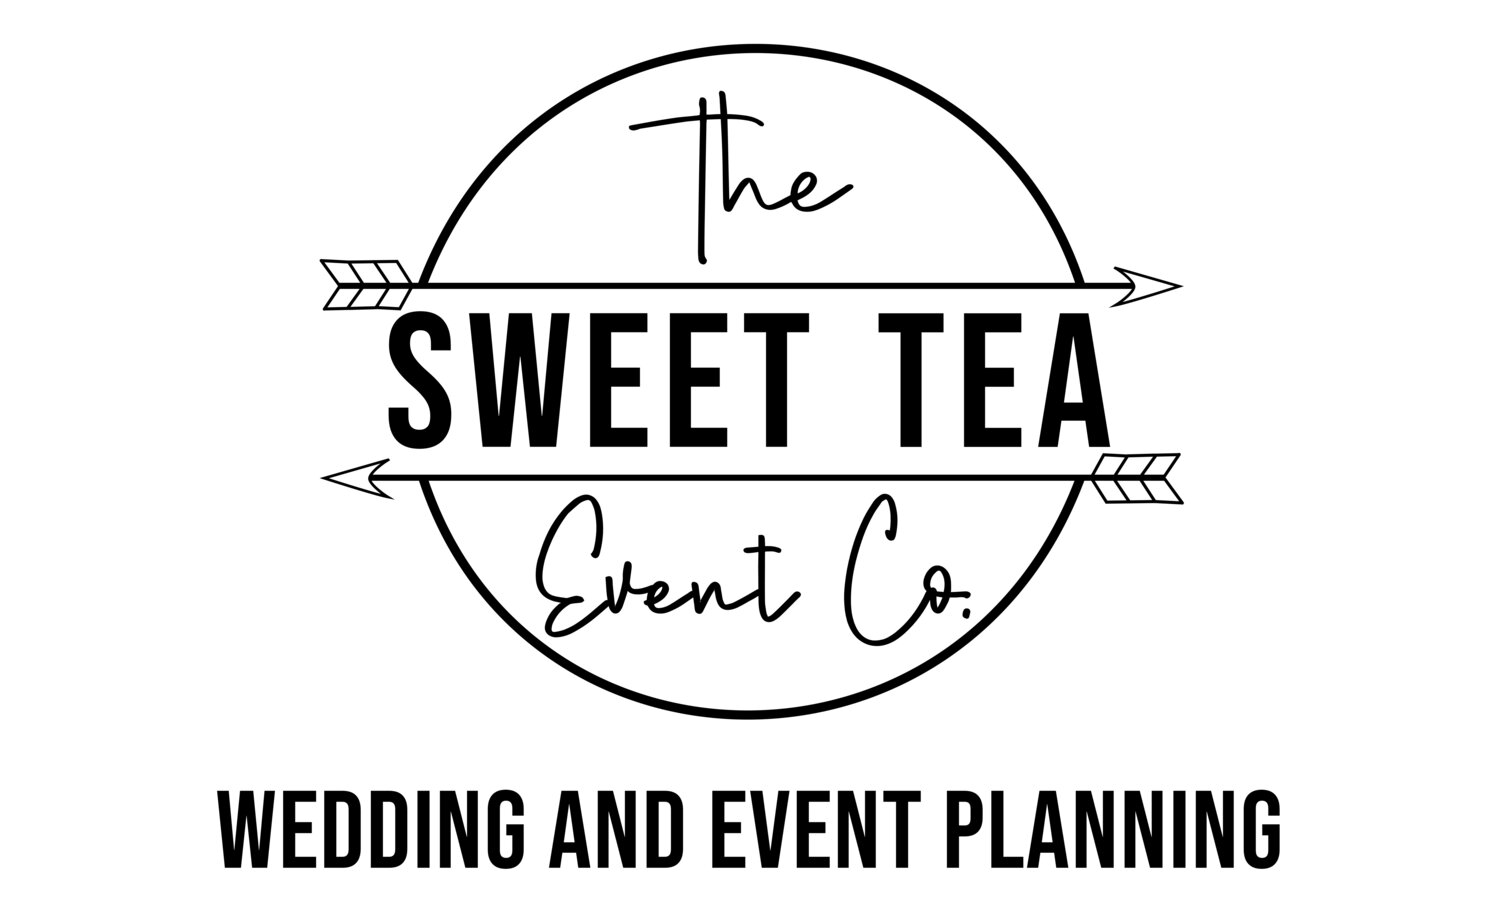 The Sweet Tea Event Company